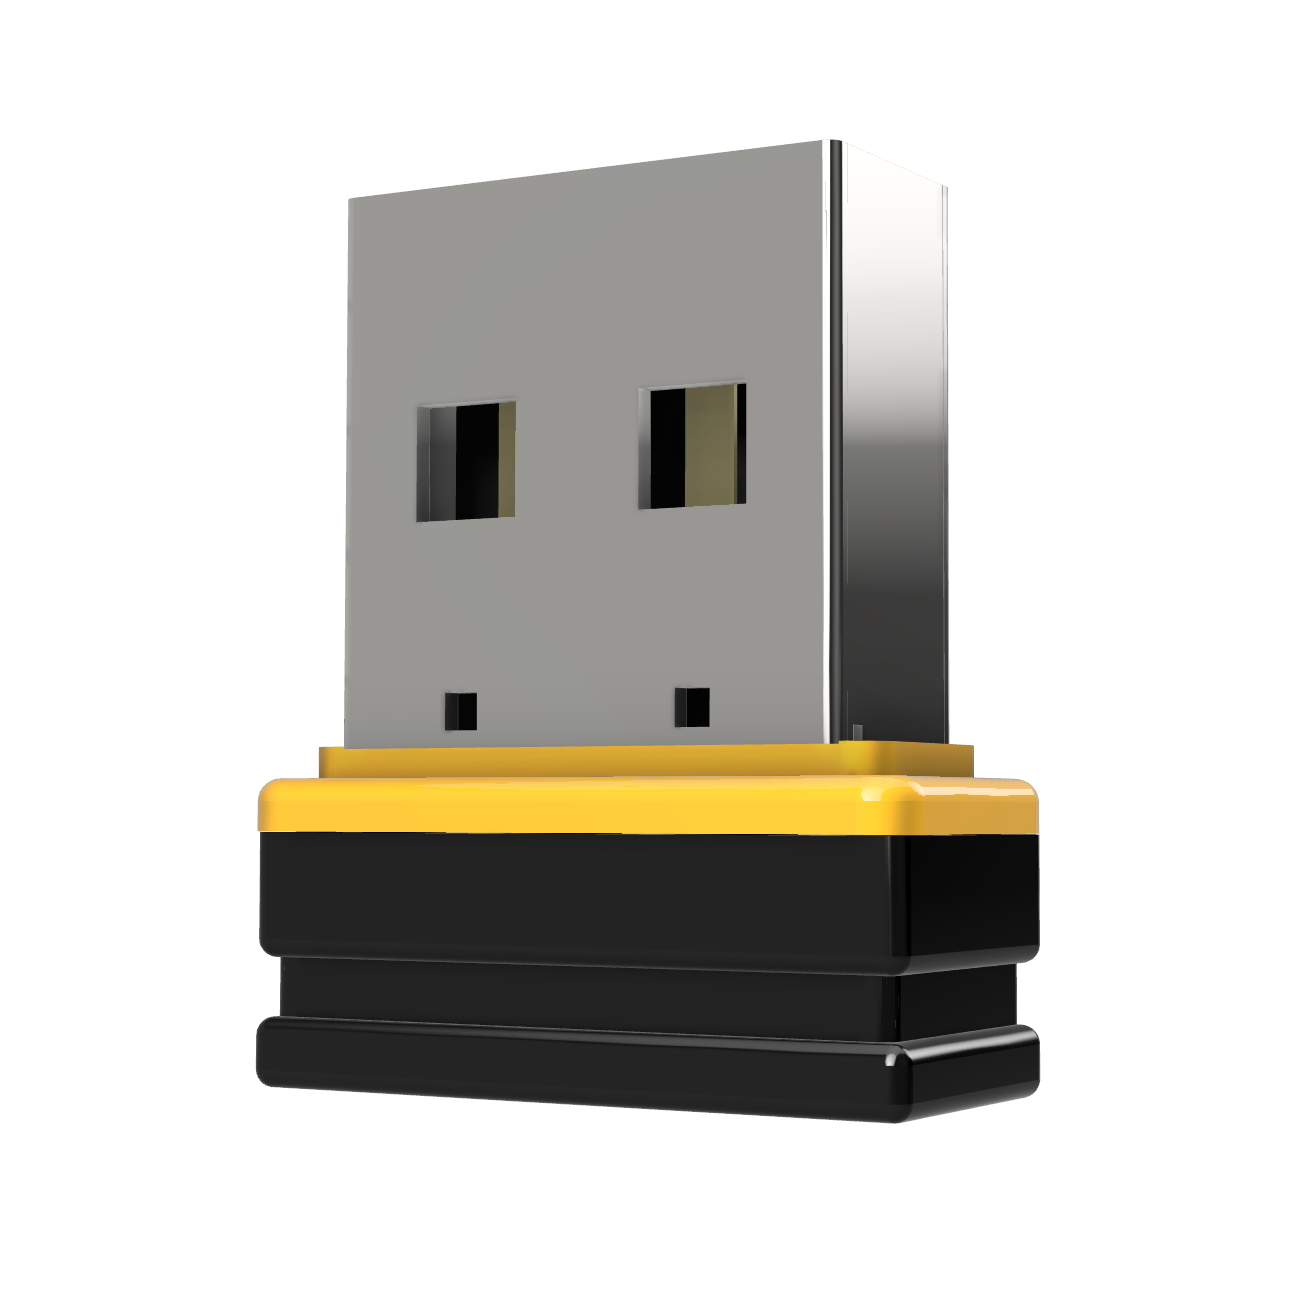 USB GERMANY ®ULTRA Mini P1 64 USB-Stick GB) (Schwarz/Gelb